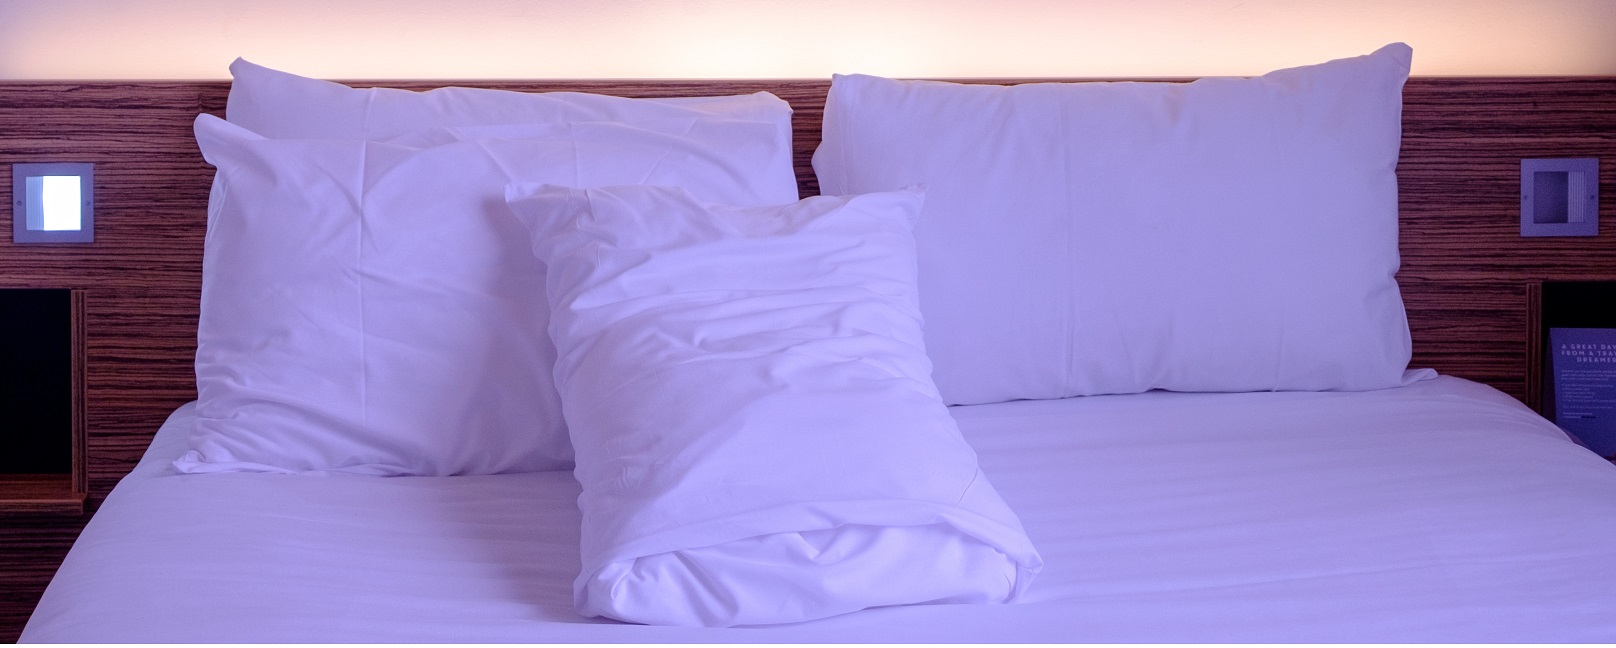 How to Sleepsia Bamboo Pillow - Premium Wash Bamboo Pillow for Good Hygiene...